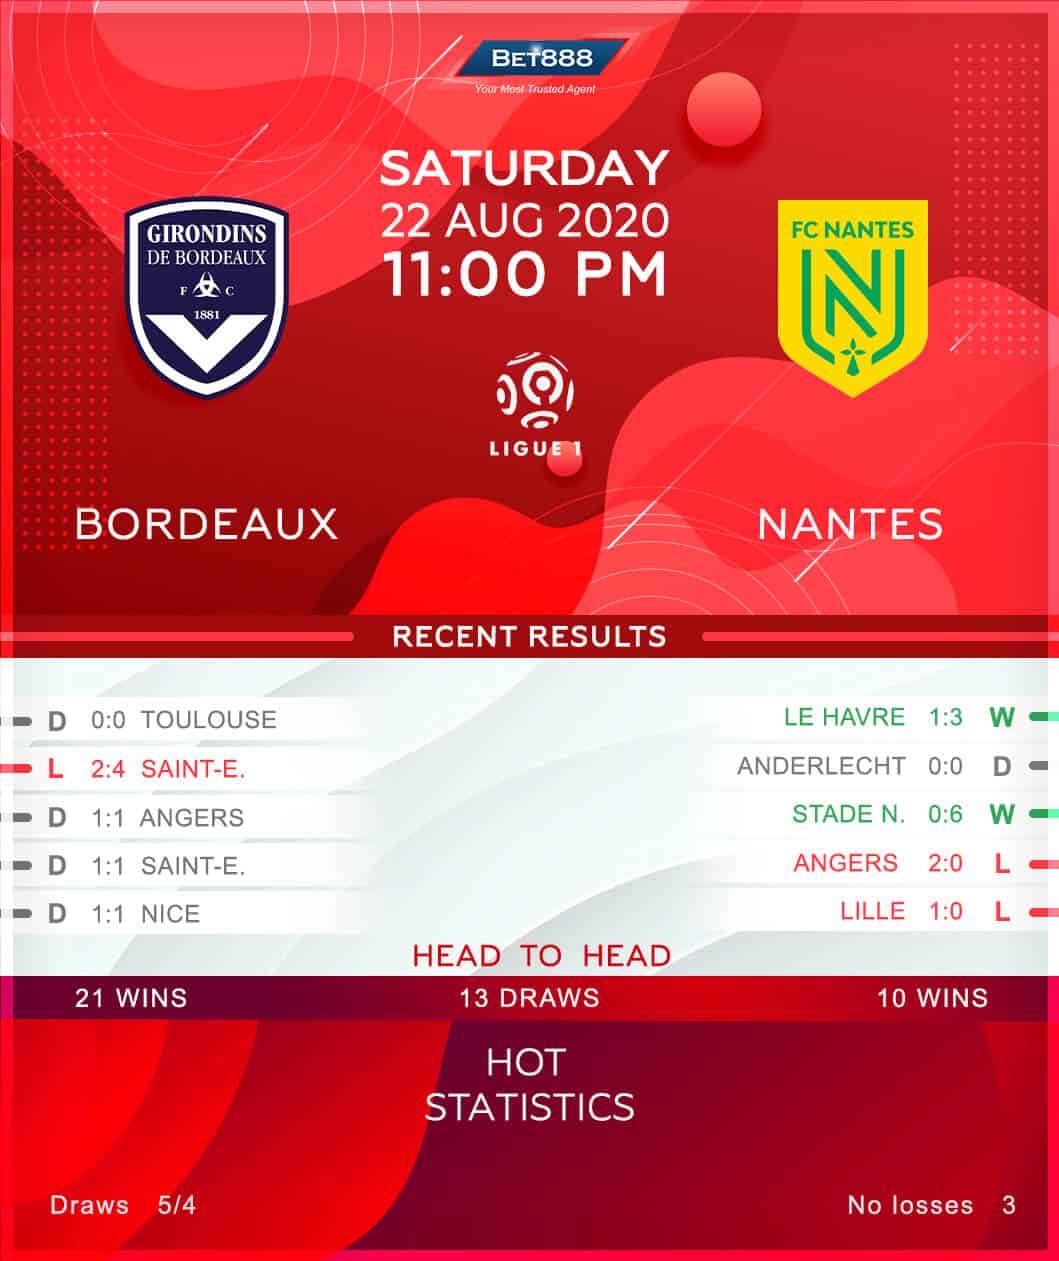 Bordeaux vs Nantes 22/08/20